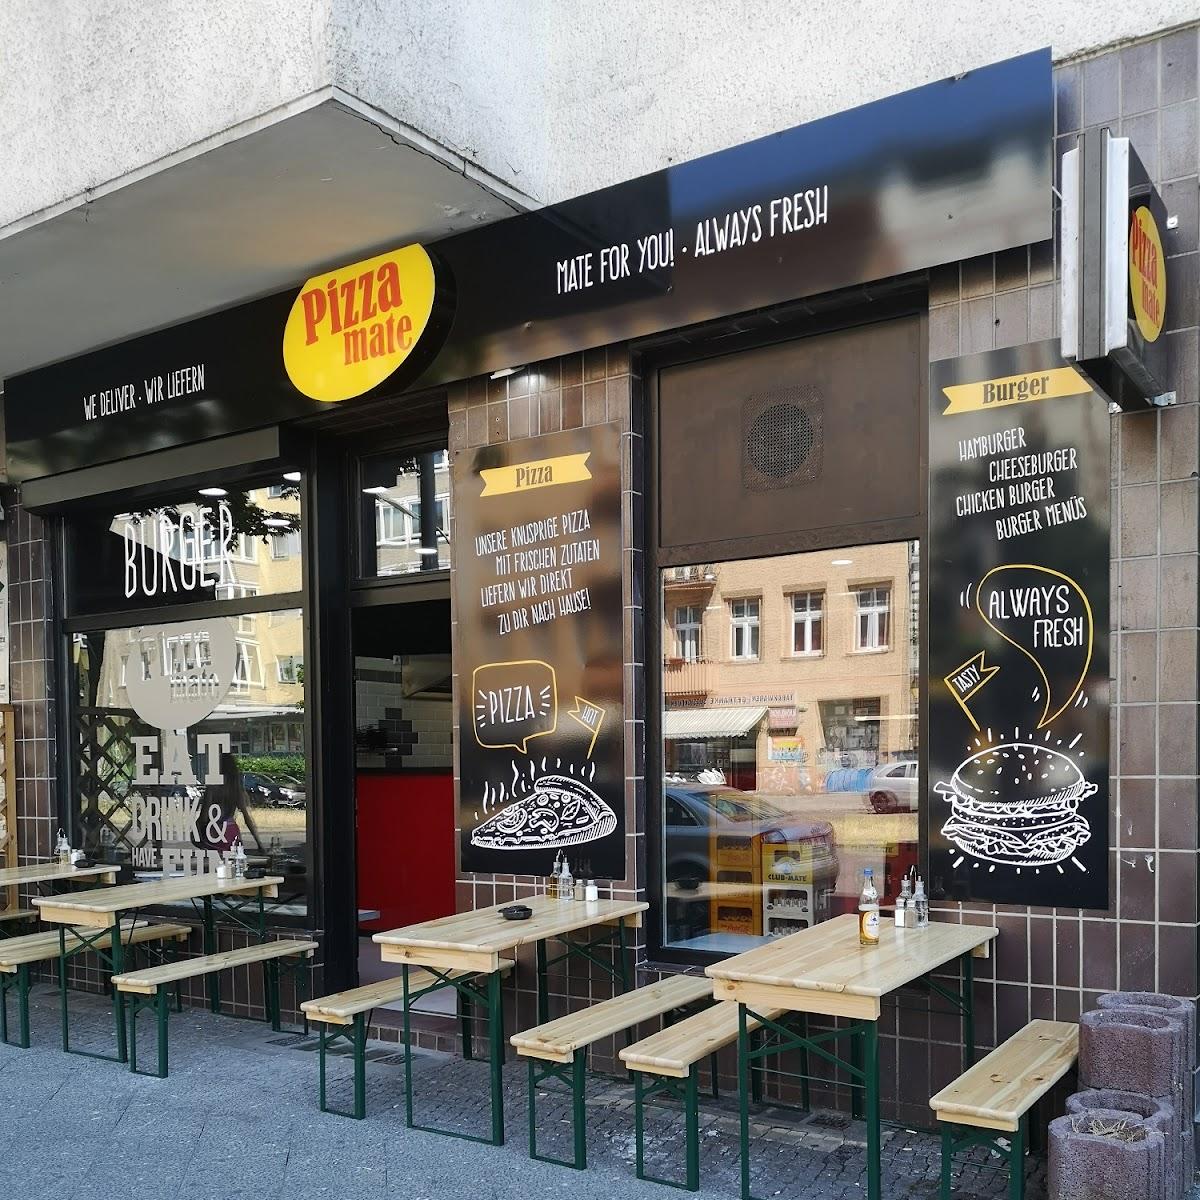 Restaurant "Pizza Mate" in Berlin